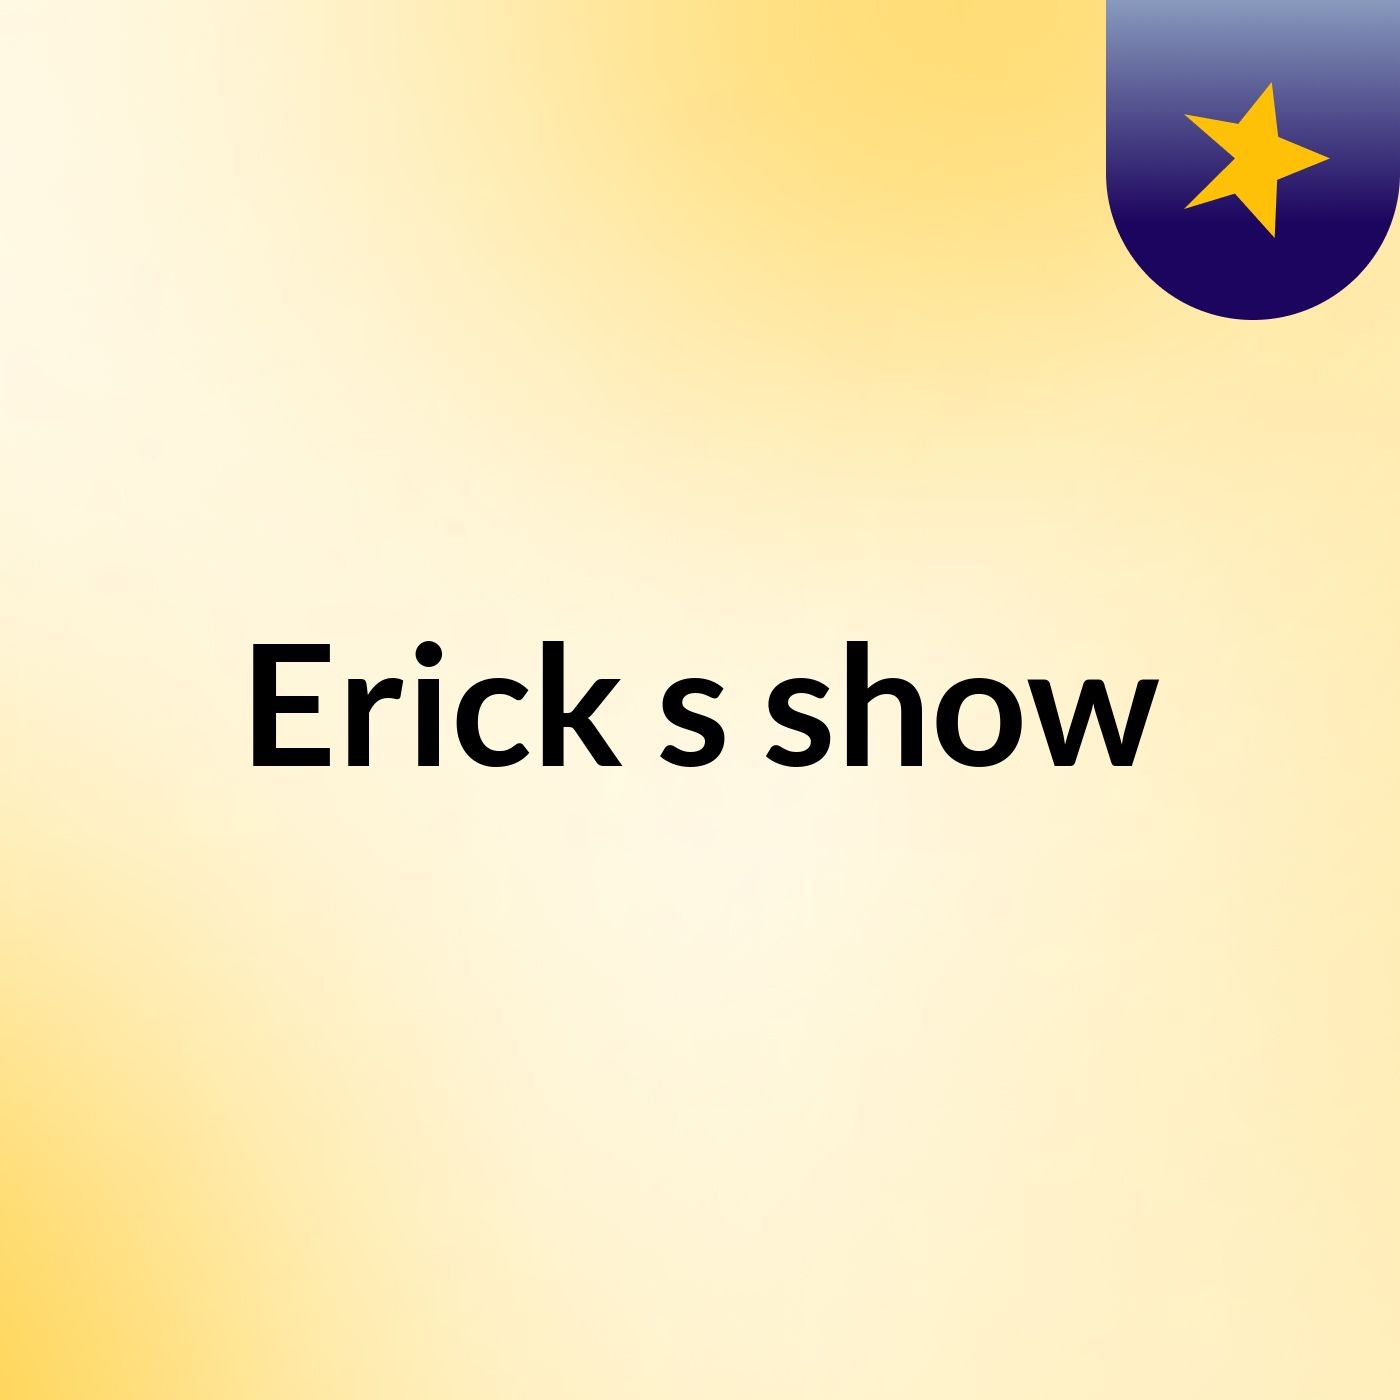 Erick's show